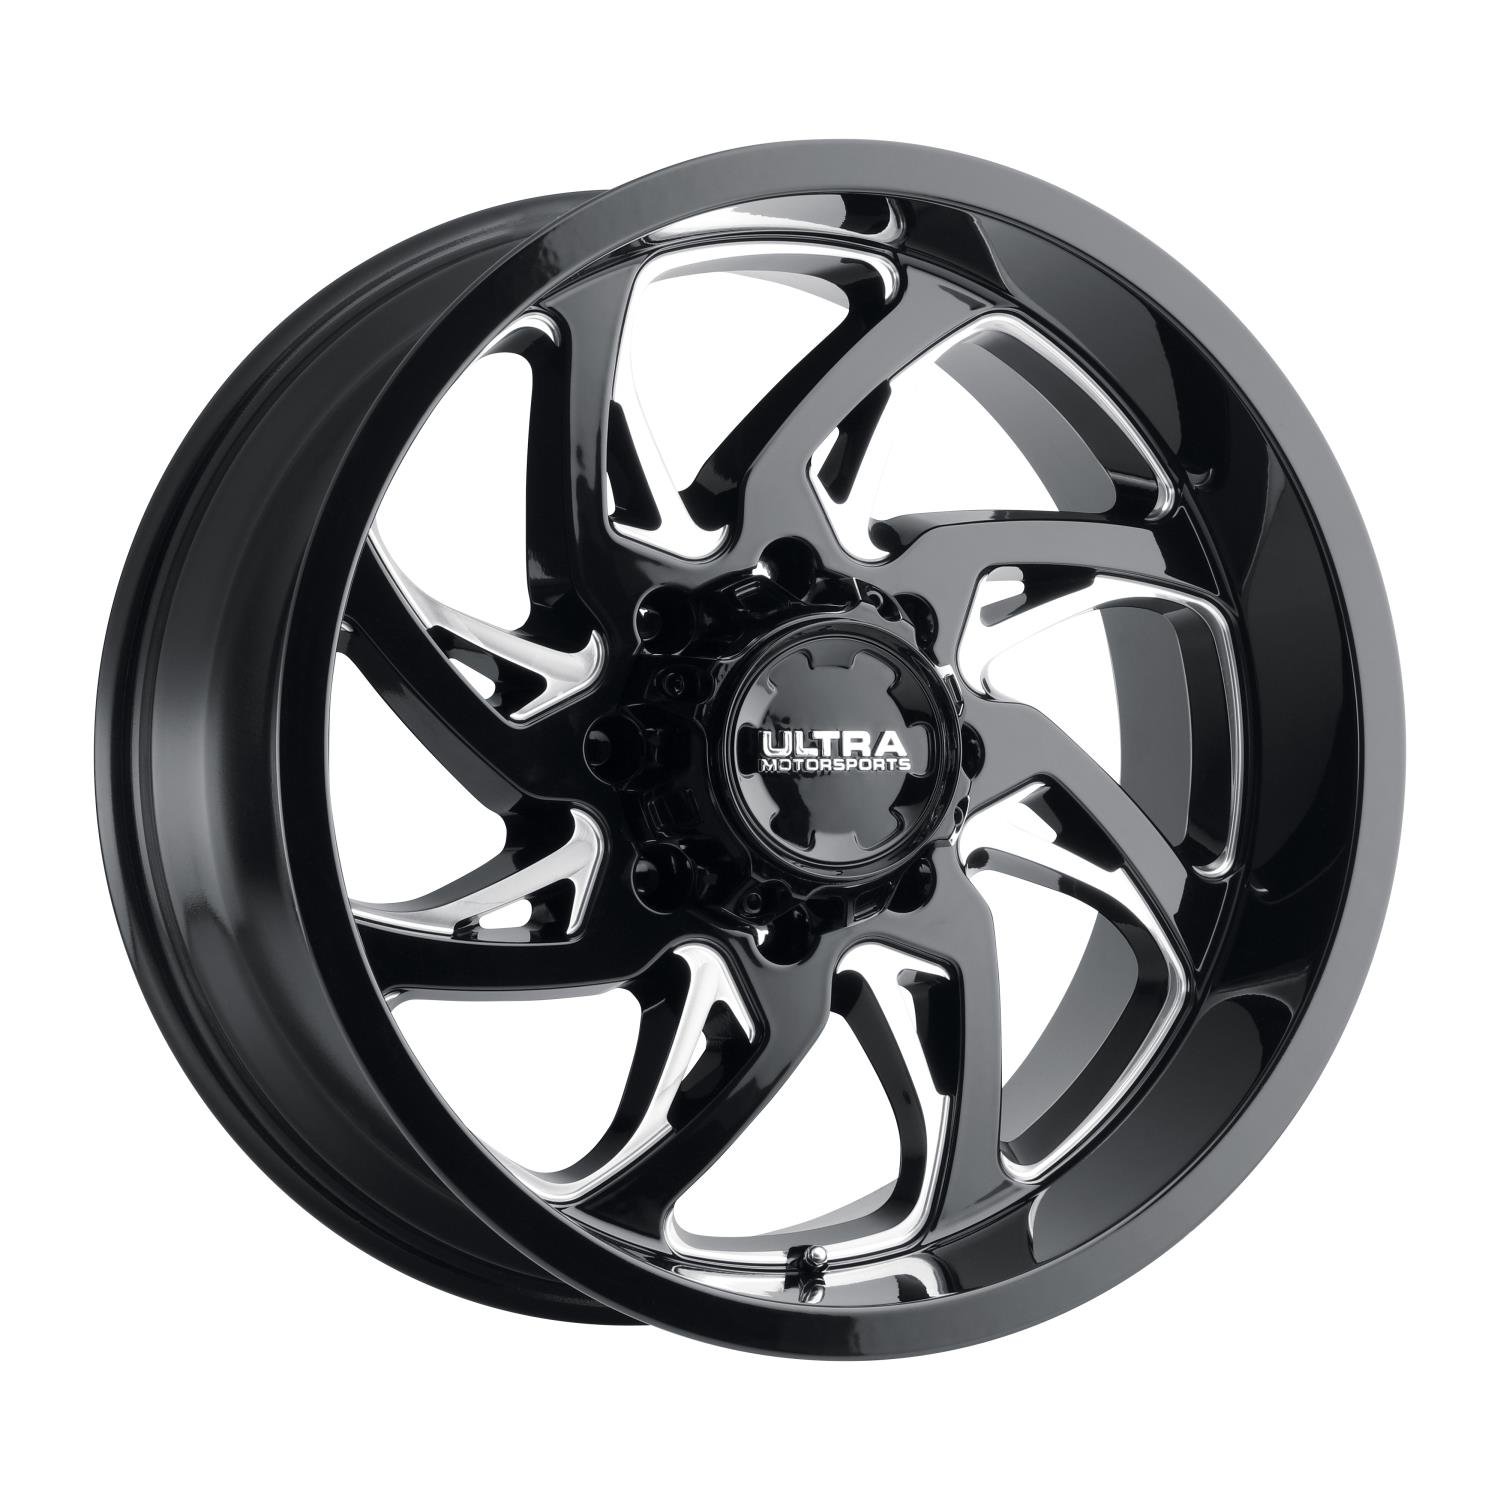 230-Series Villain Wheel, Size: 17x9", Bolt Pattern: 8x6.5" [Gloss Black w/Milled Accents]